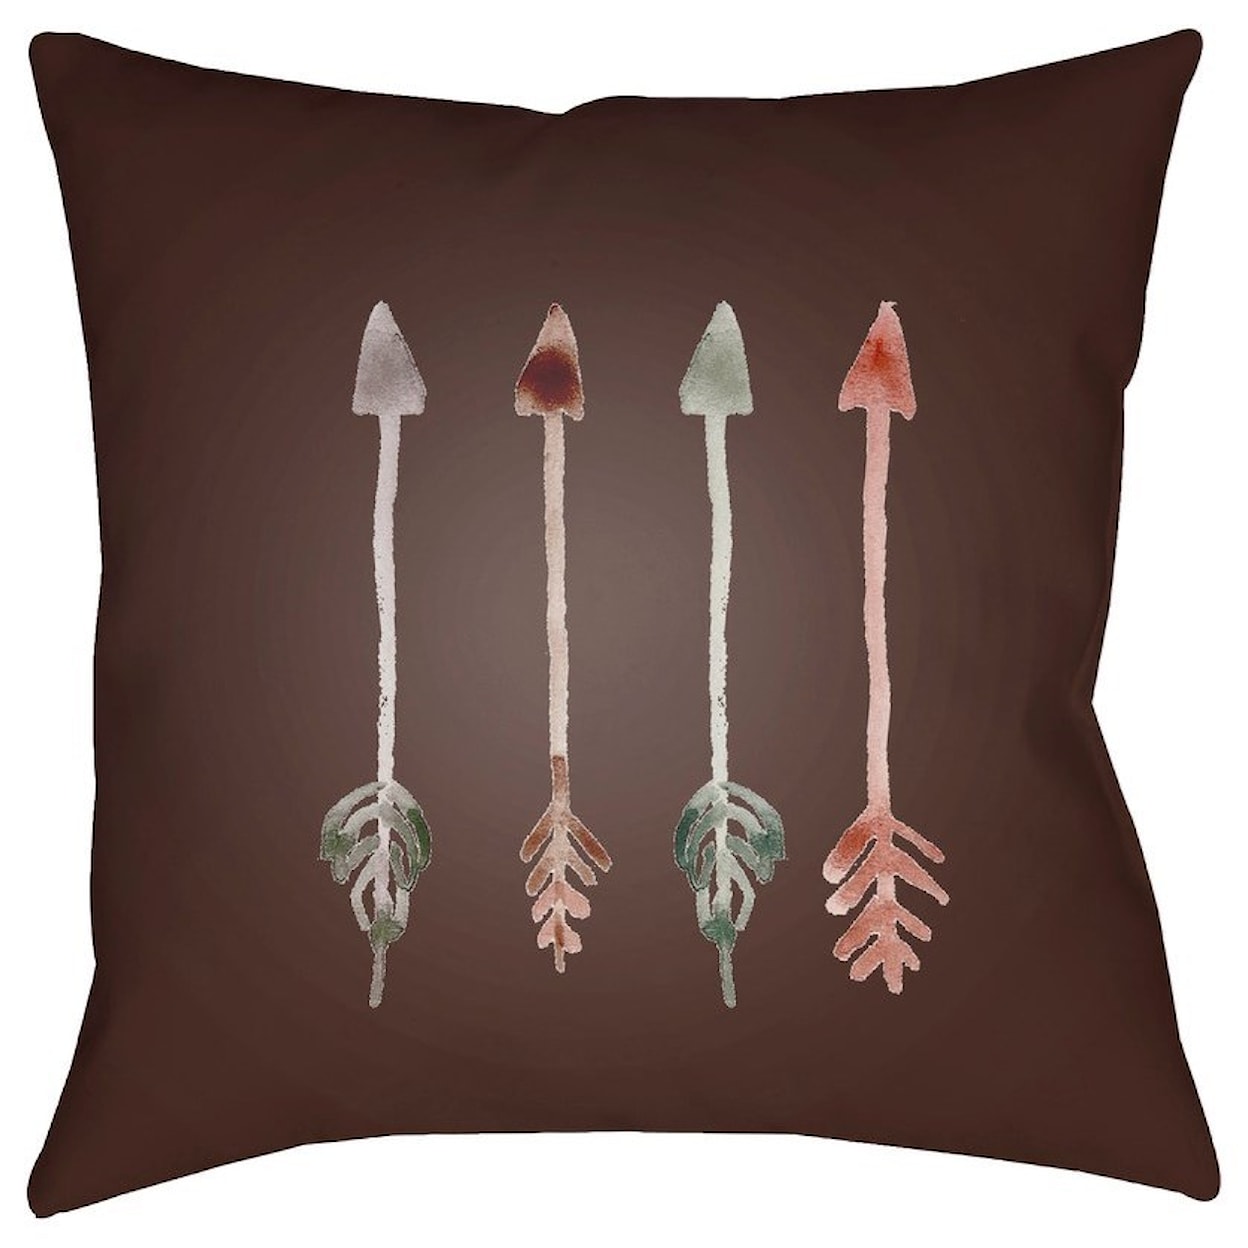 Surya Arrows 18 x 18 x 4 Polyester Throw Pillow